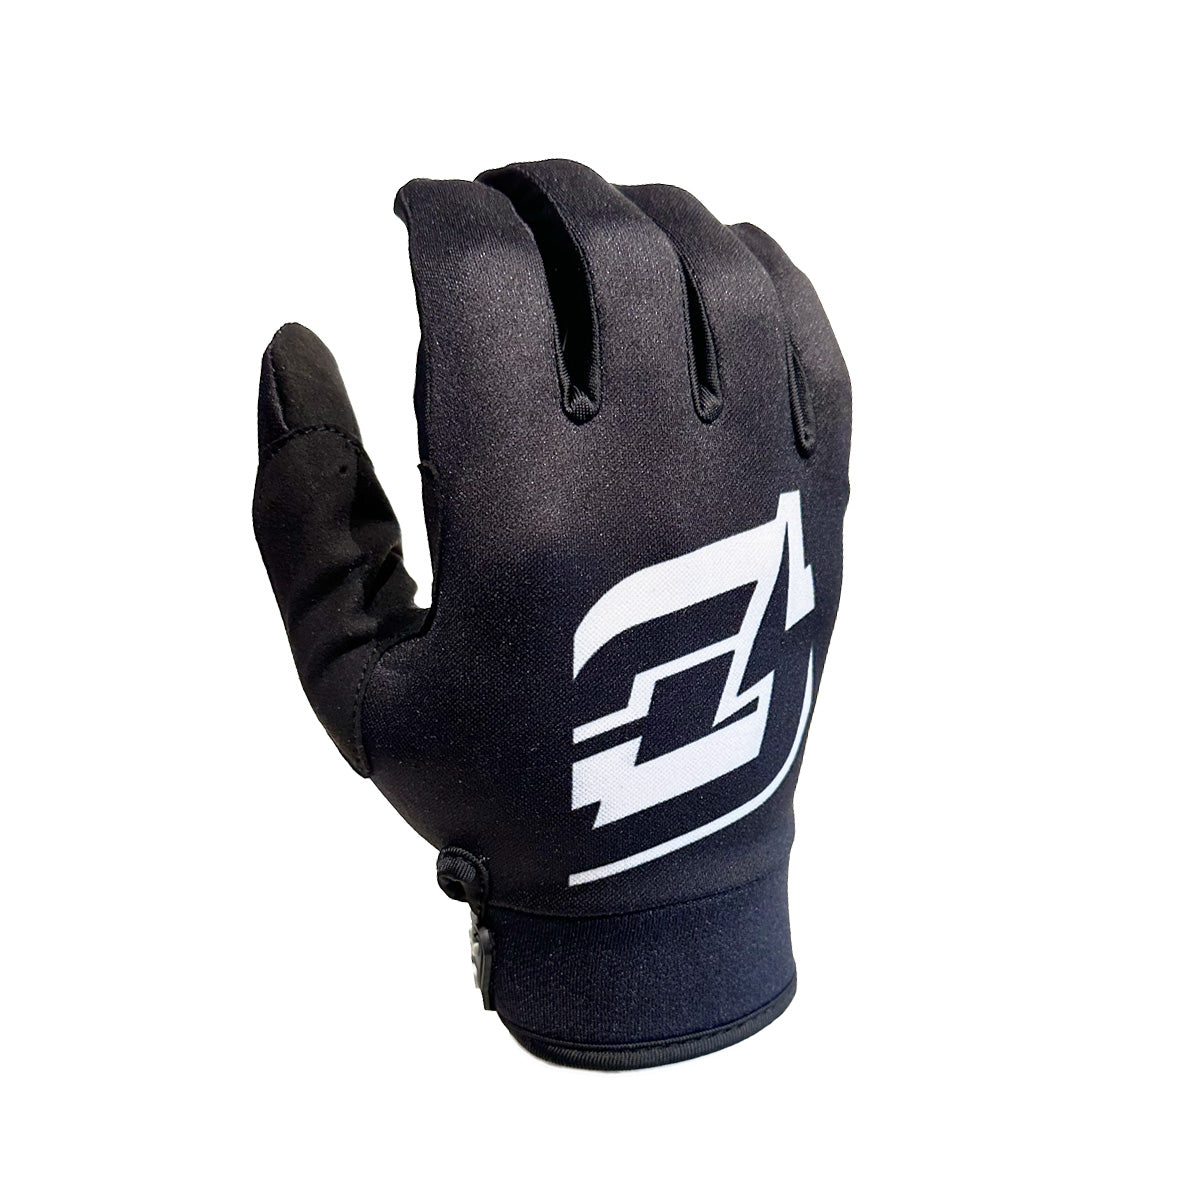 Icon black glove